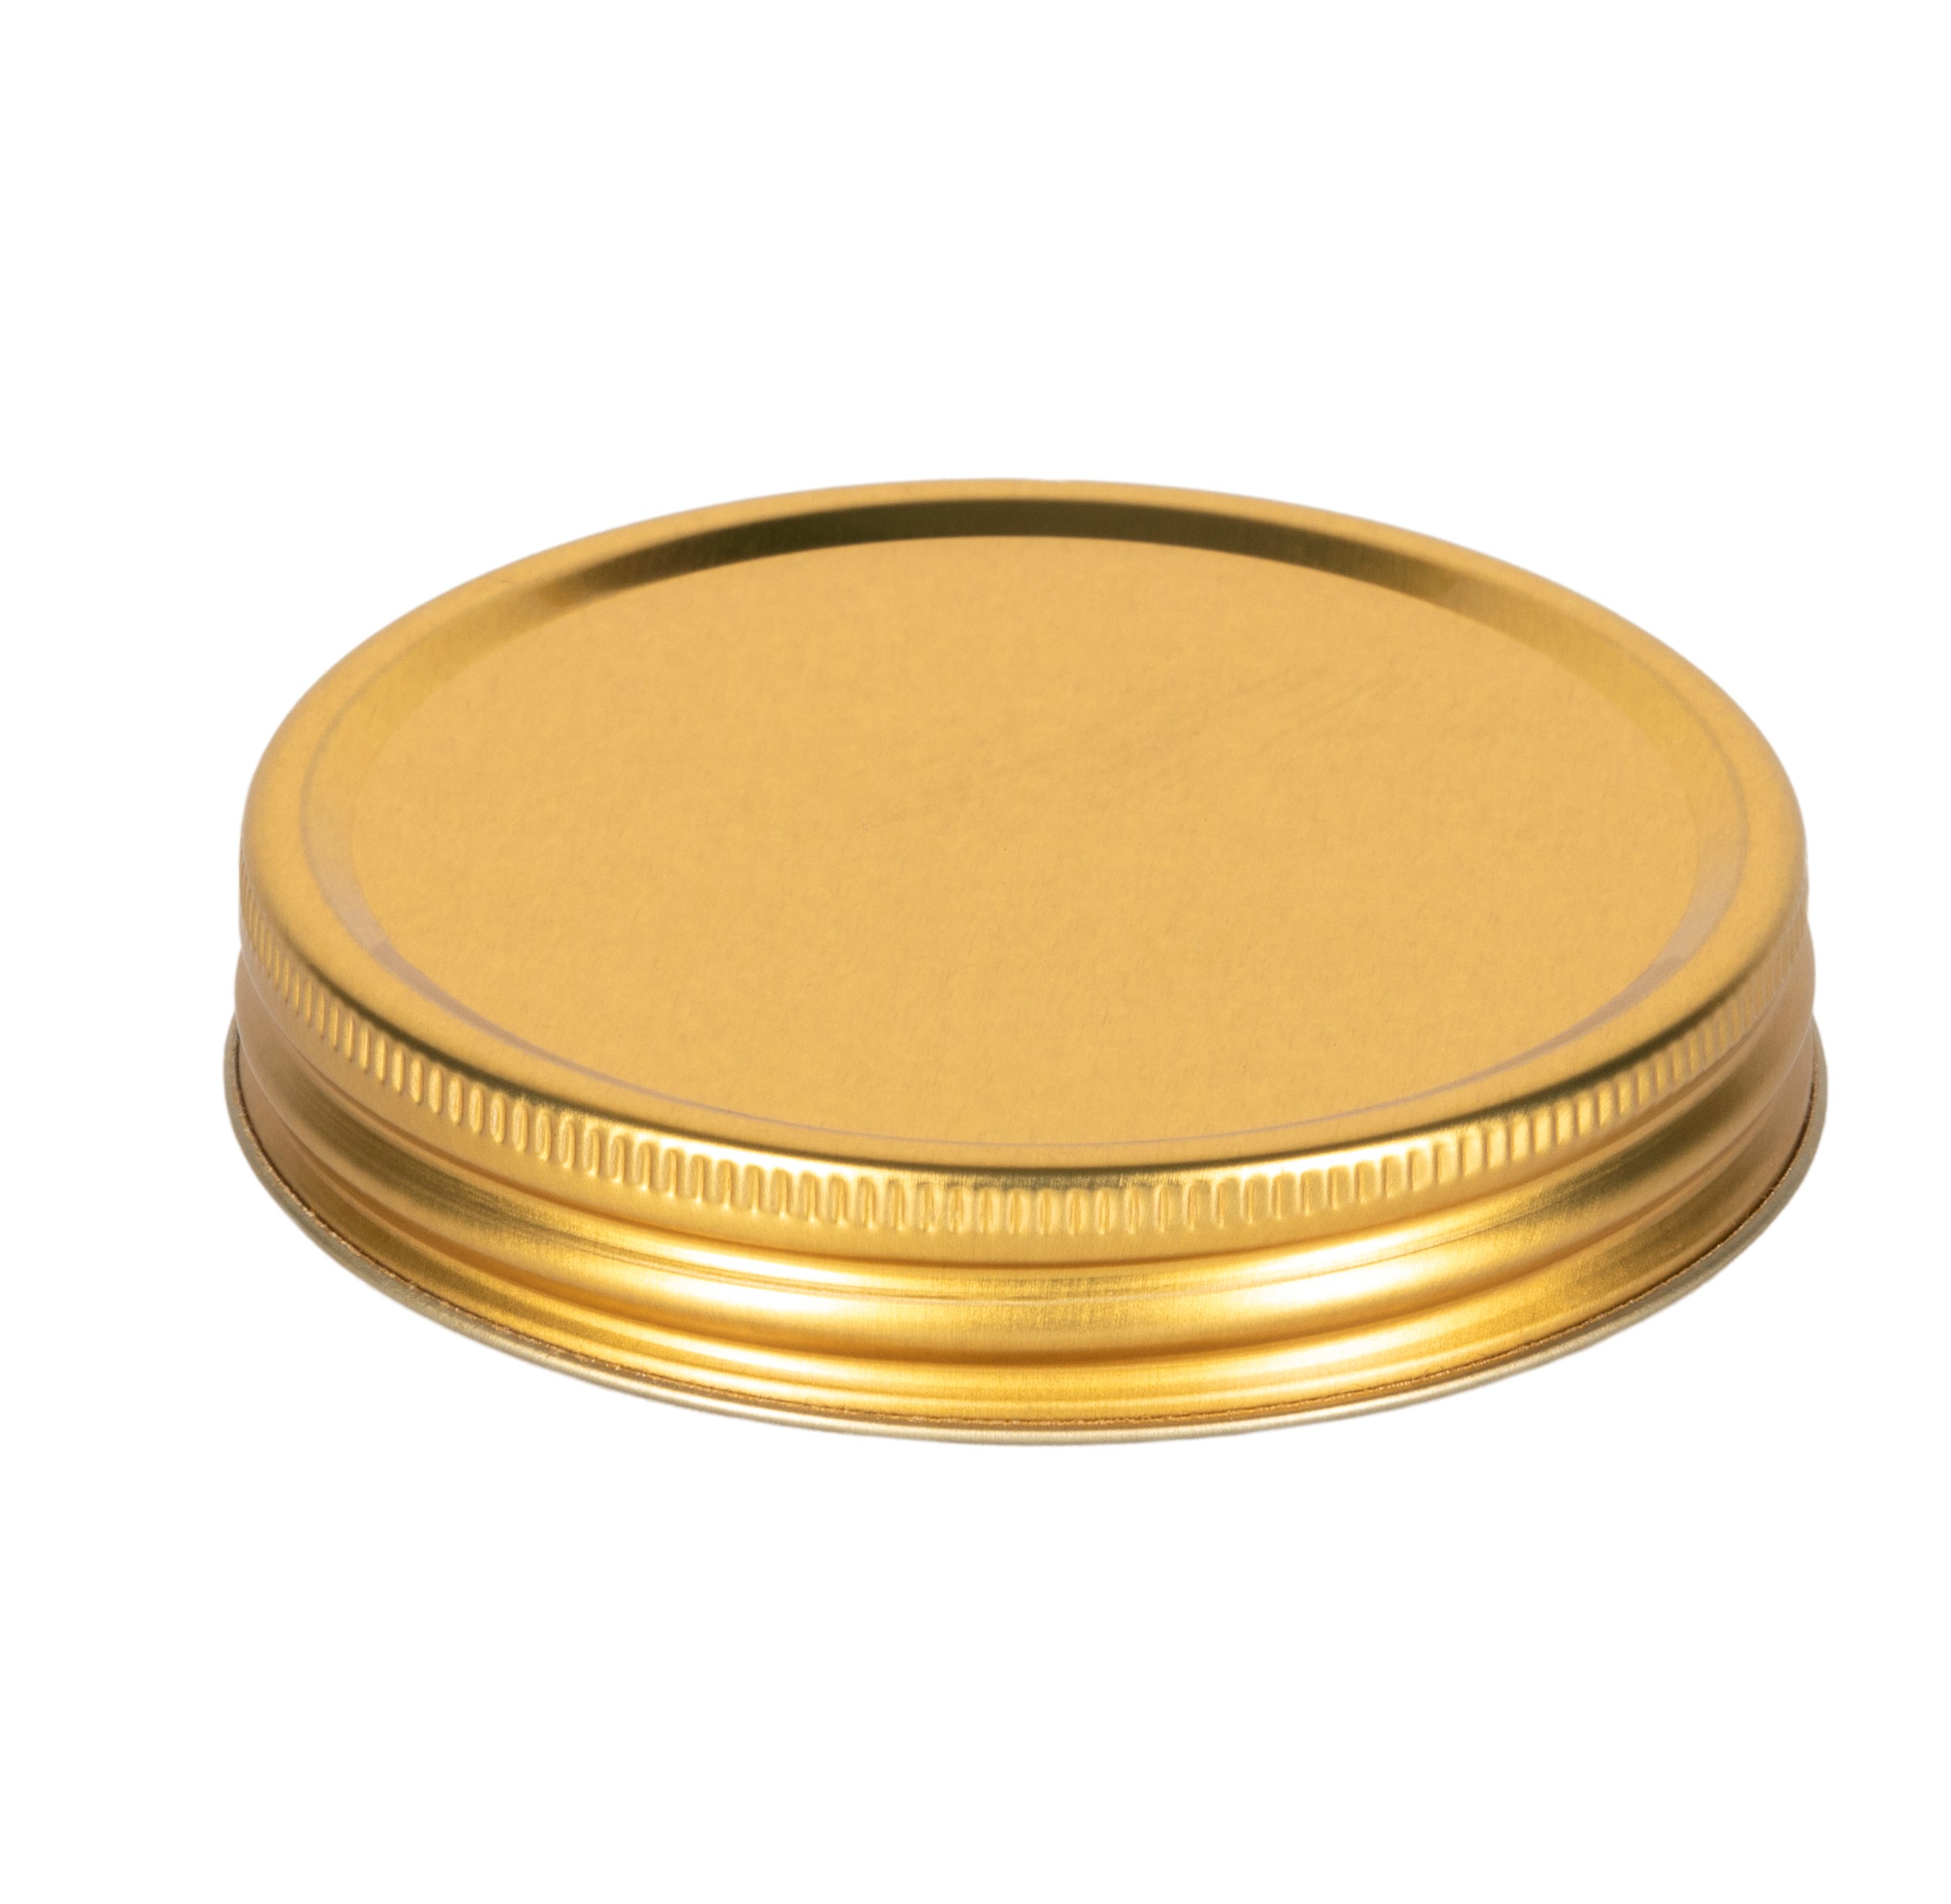 70mm – Honey Jar Screw Top Caps